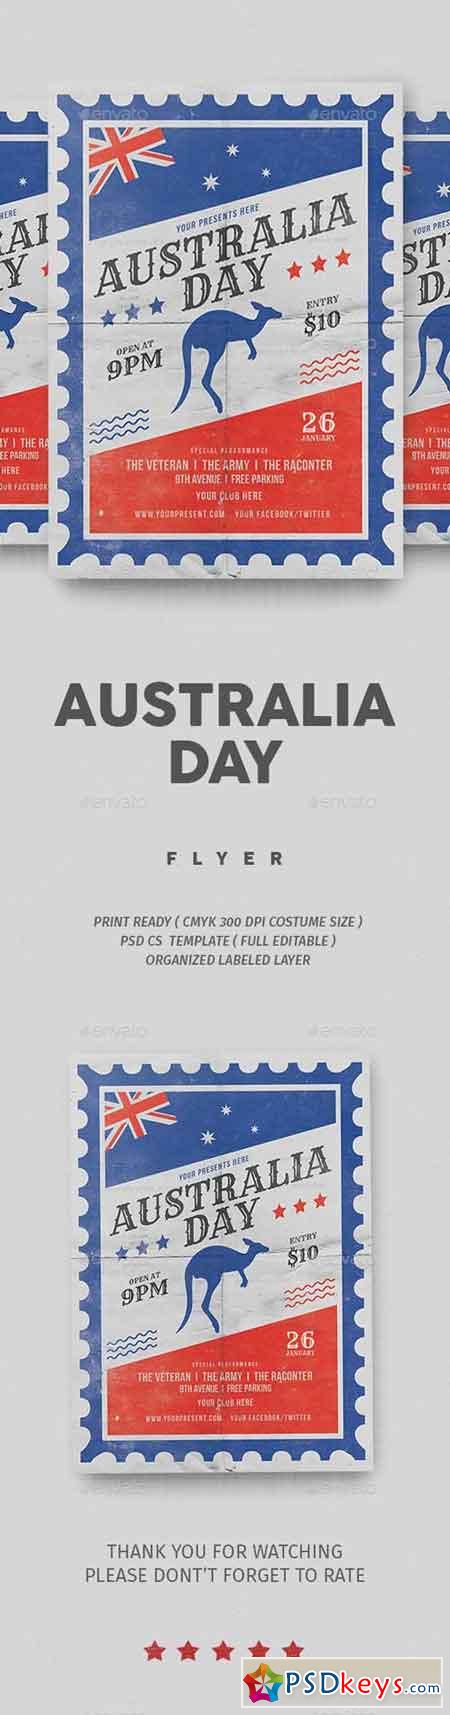 Australia Day Flyer Vol 2 19289304